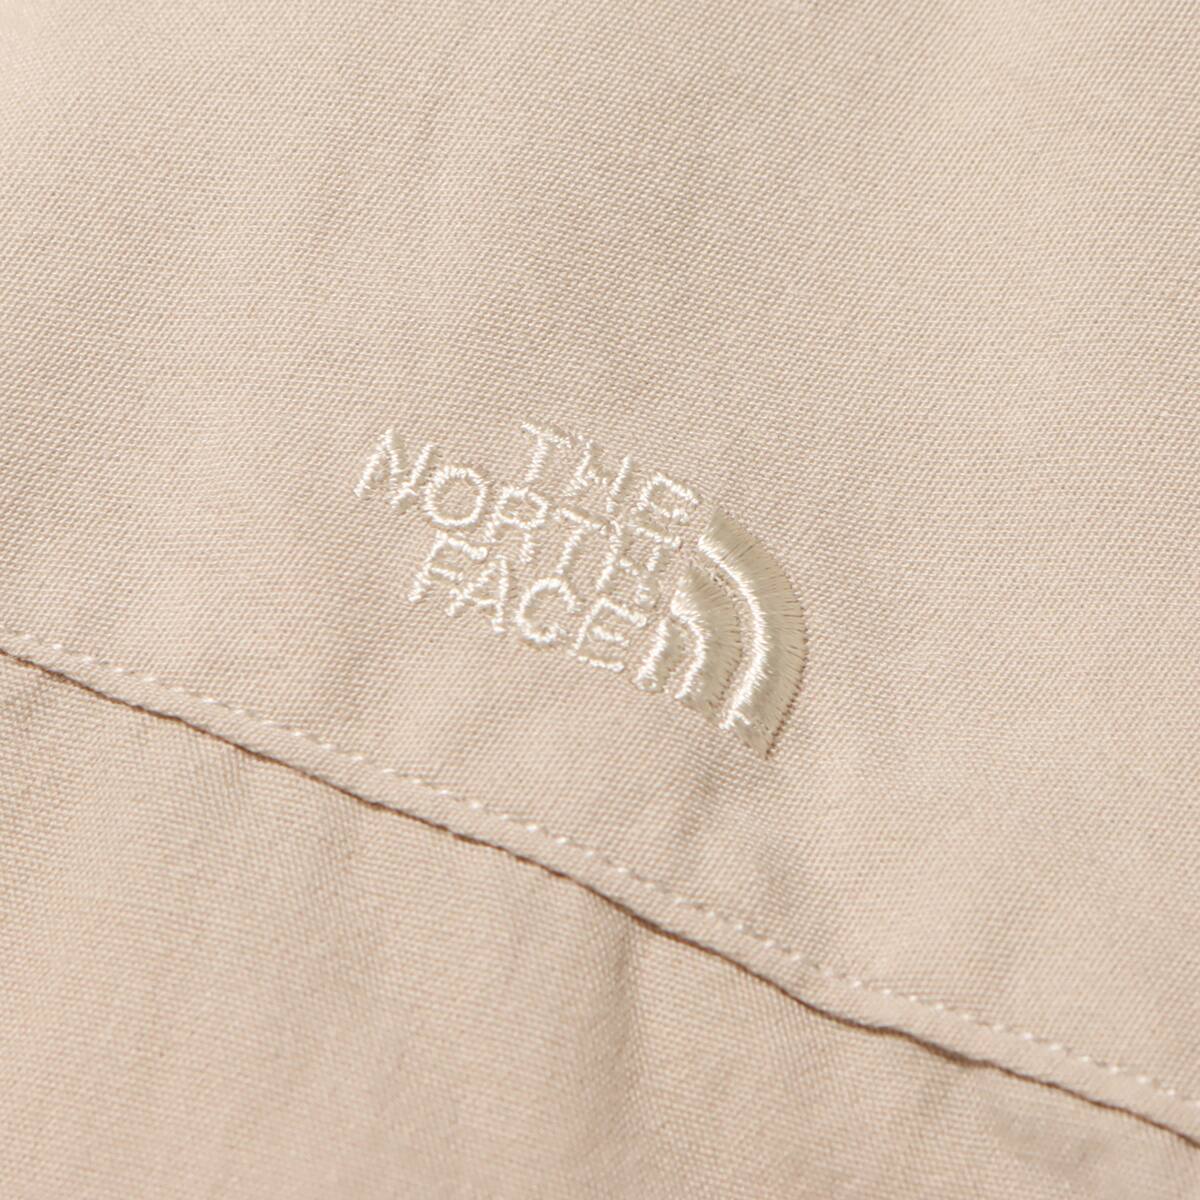 THE NORTH FACE PURPLE LABEL Regular Collar Field Shirt Beige 23FW-I